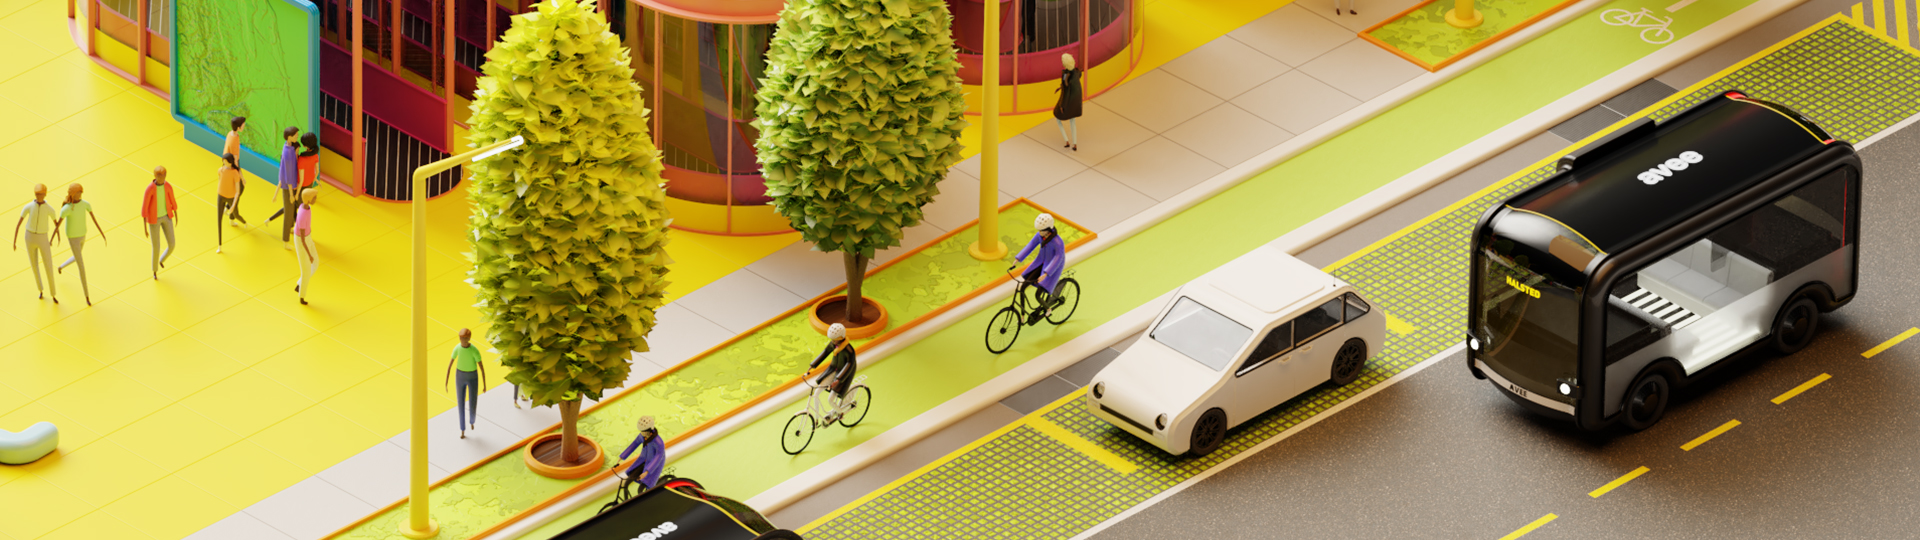 3D render of people on bicycles.